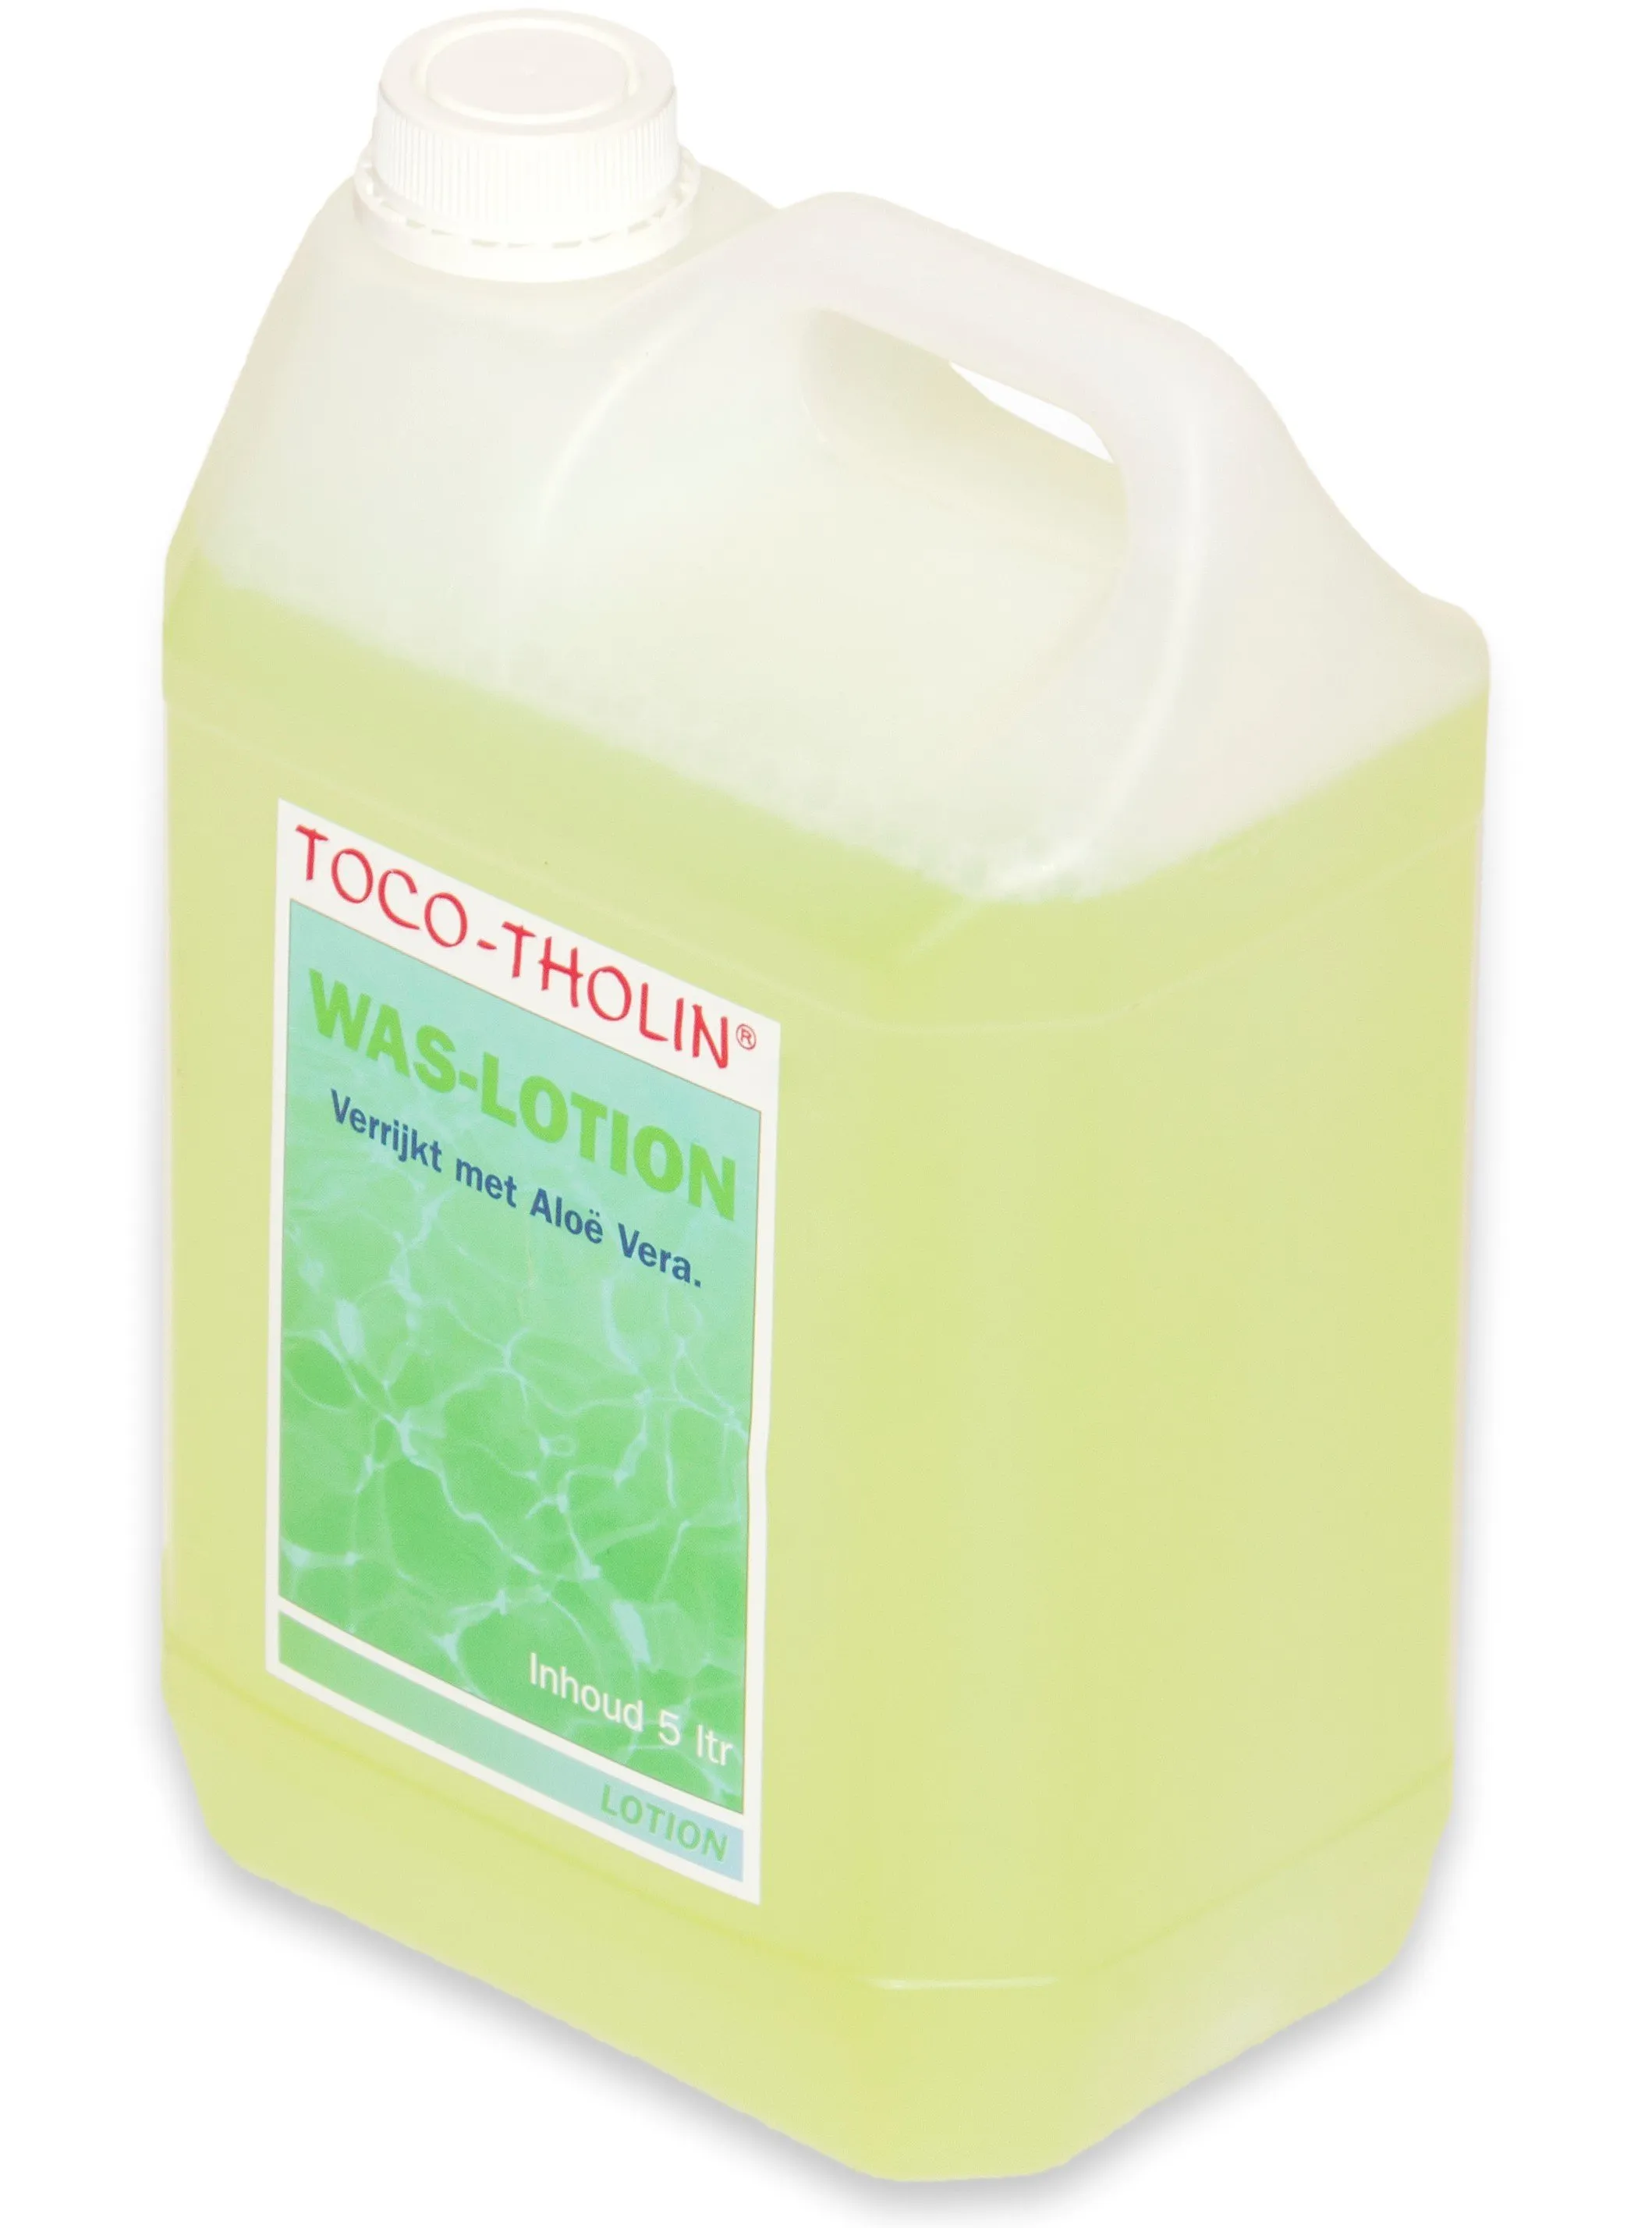 Waslotion Toco Tholin 5 liter